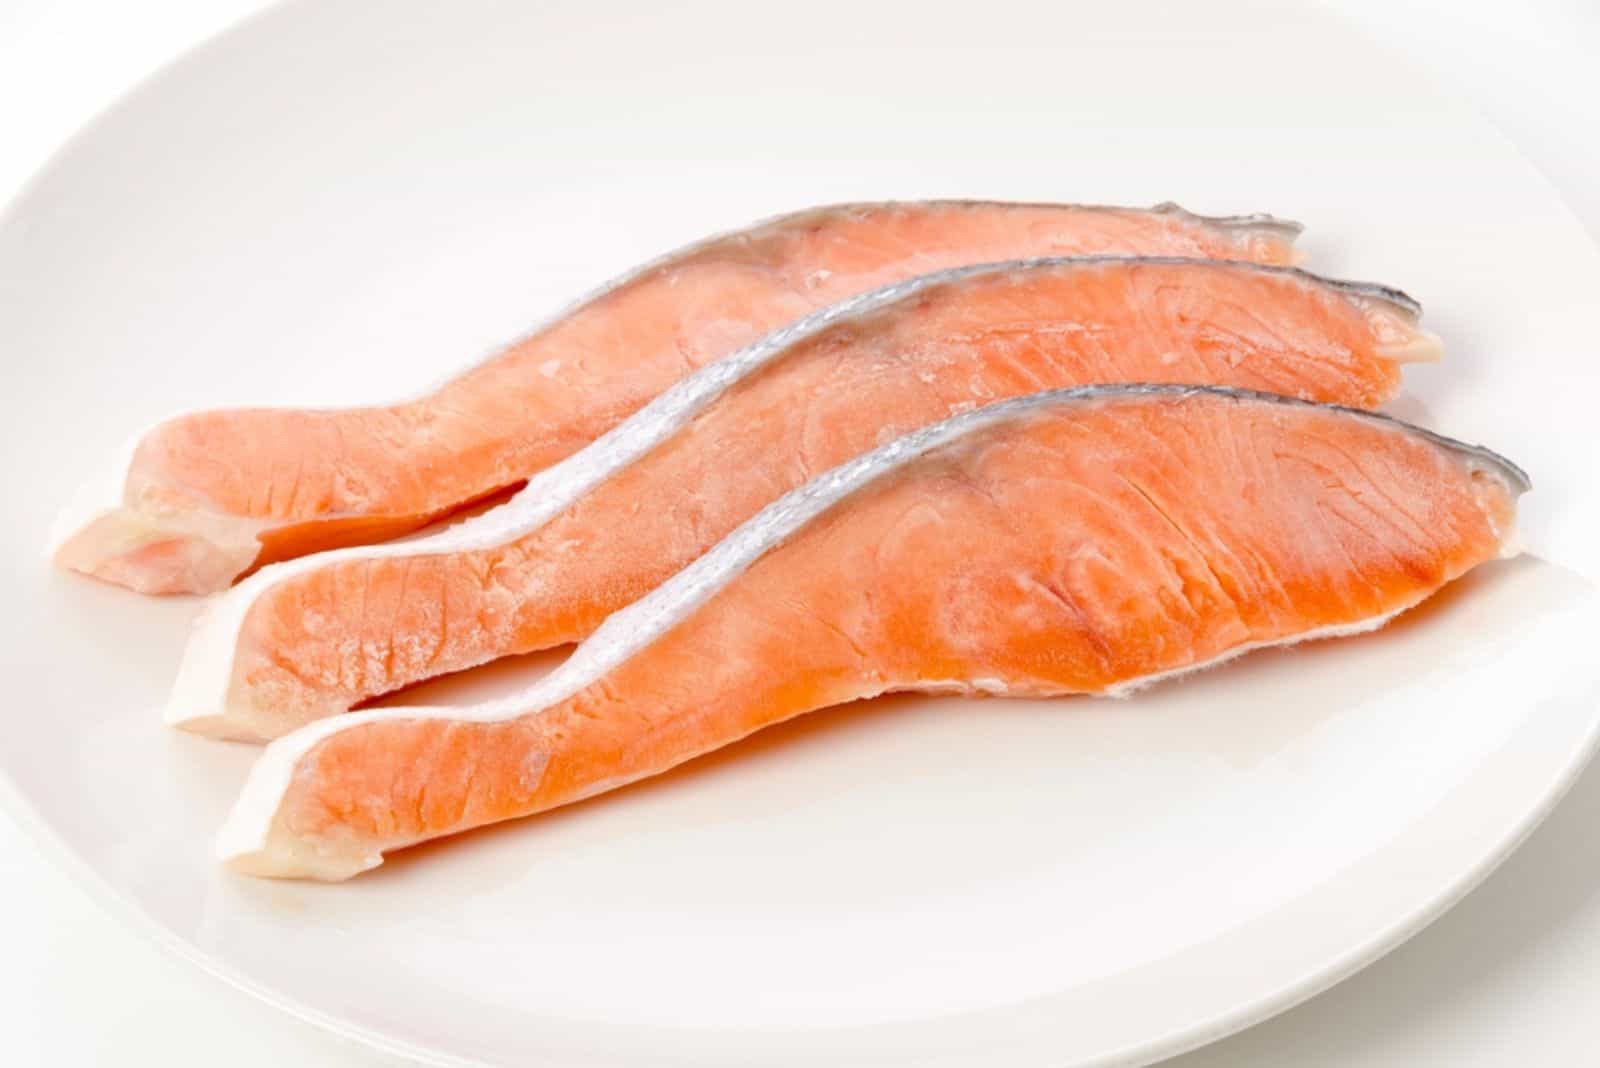 Raw Coho Salmon fillet on white plate